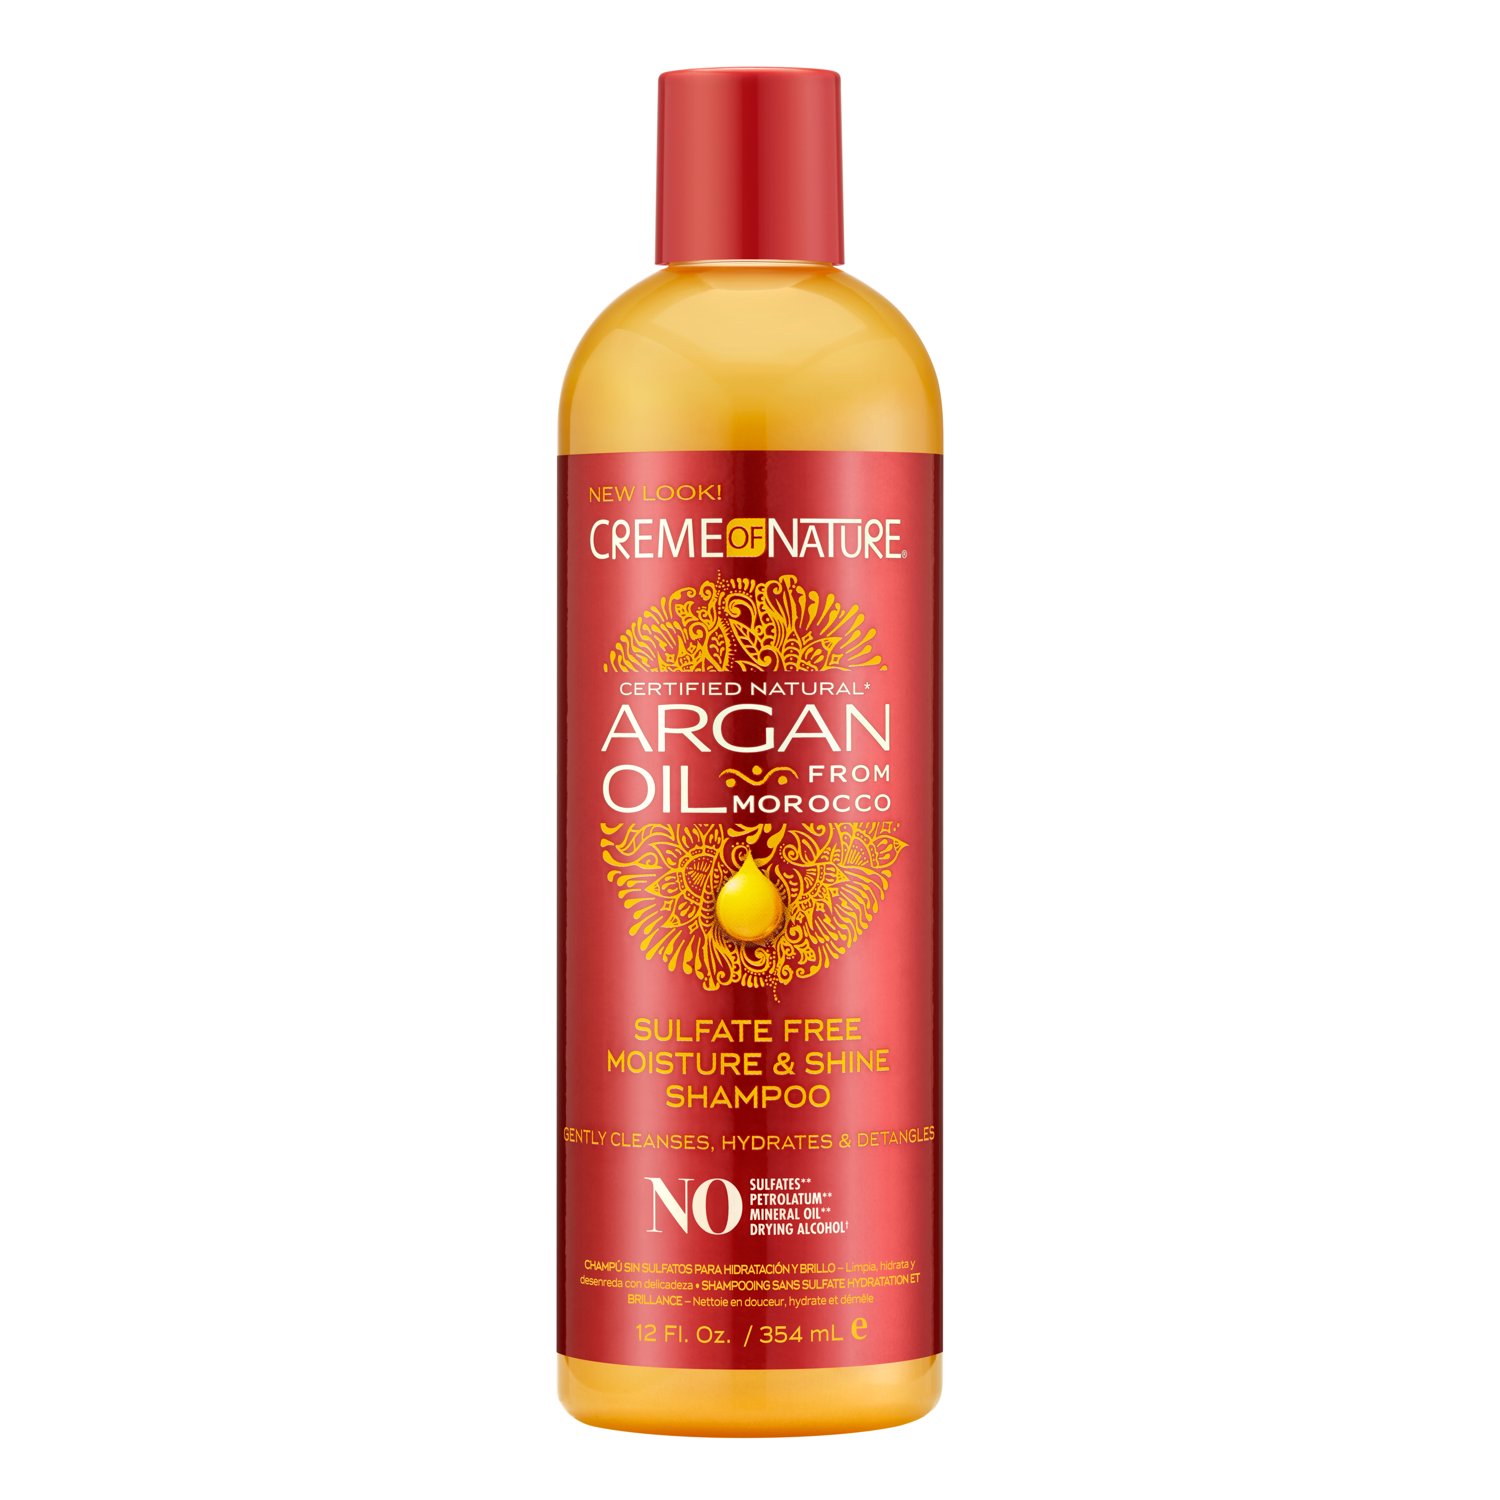 Creme of Nature Argan Oil Sulfate Free Moisture & Shine Shampoo, 12 oz - image 1 of 12